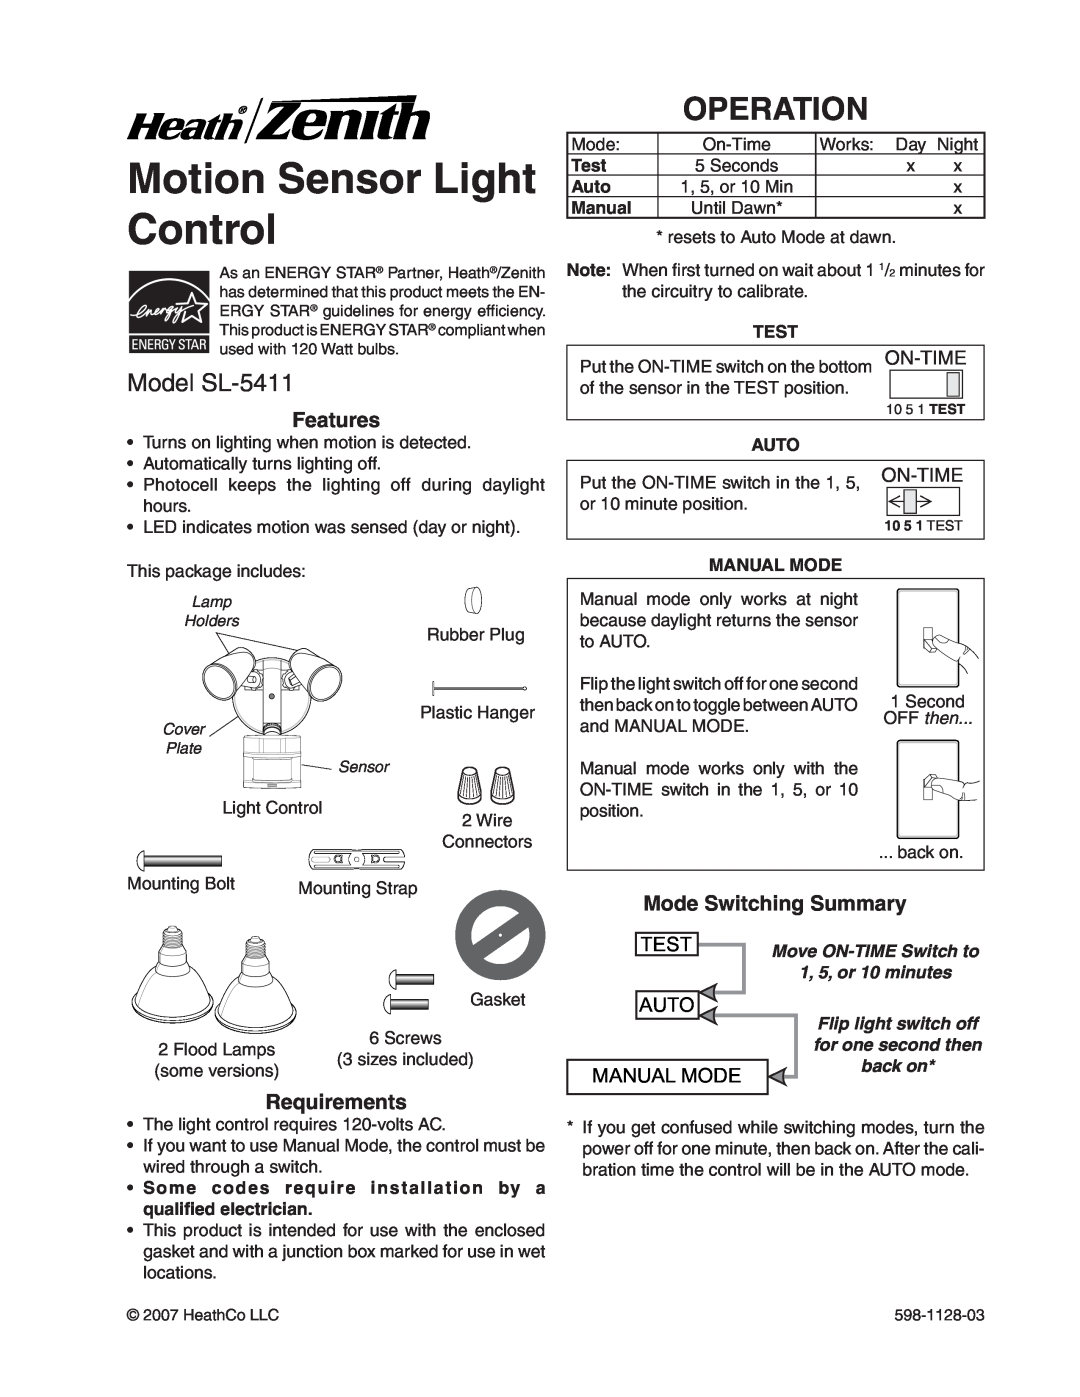 Heath Zenith SL-5411-WH manual Operation, Model SL-5411, Motion Sensor Light Control, Mode Switching Summary, On-Time 